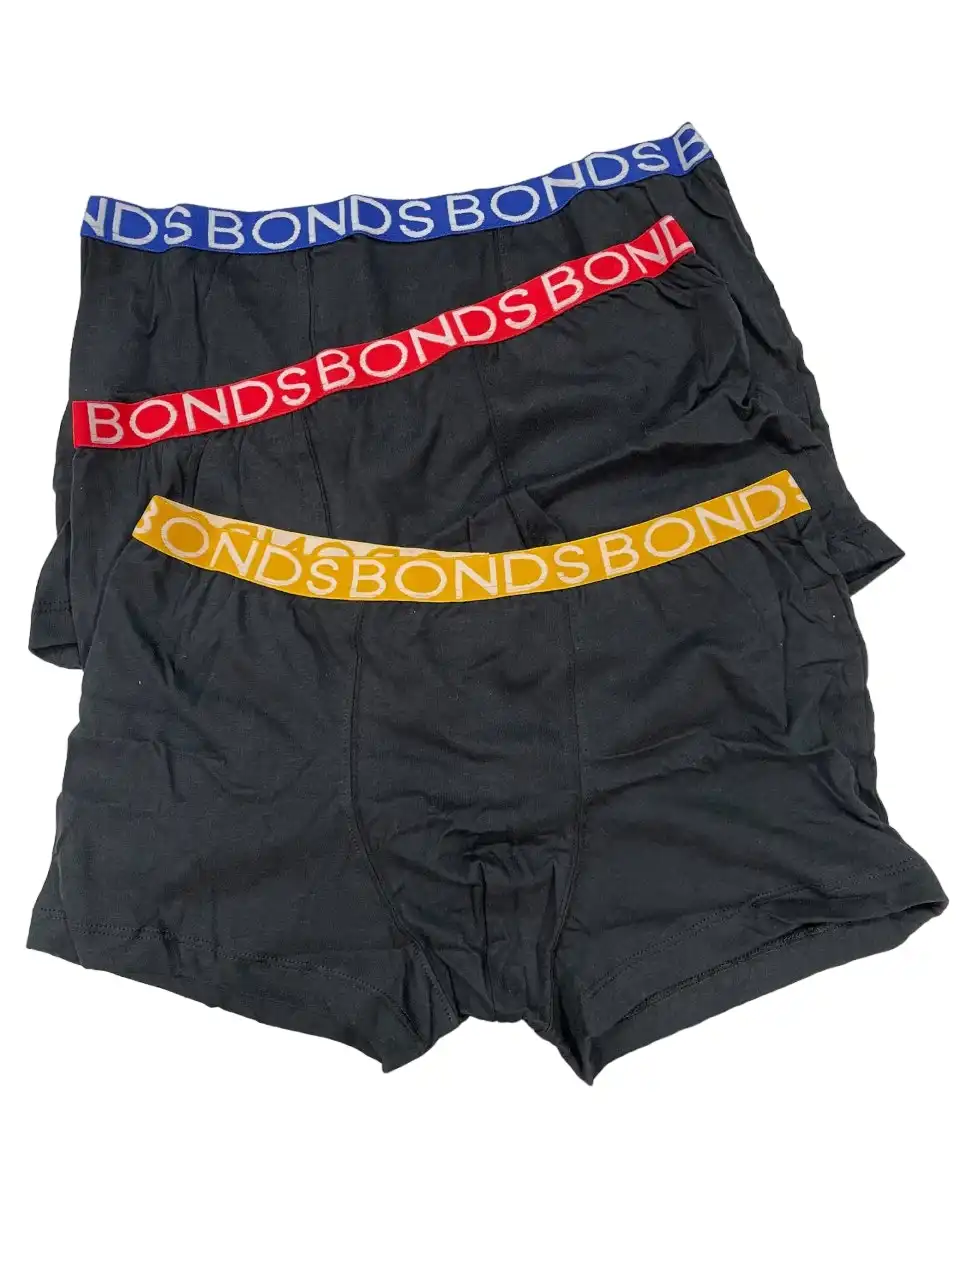 9 Pairs X Boys Bonds Trunks Plain Underwear Undies Black With Multi Band